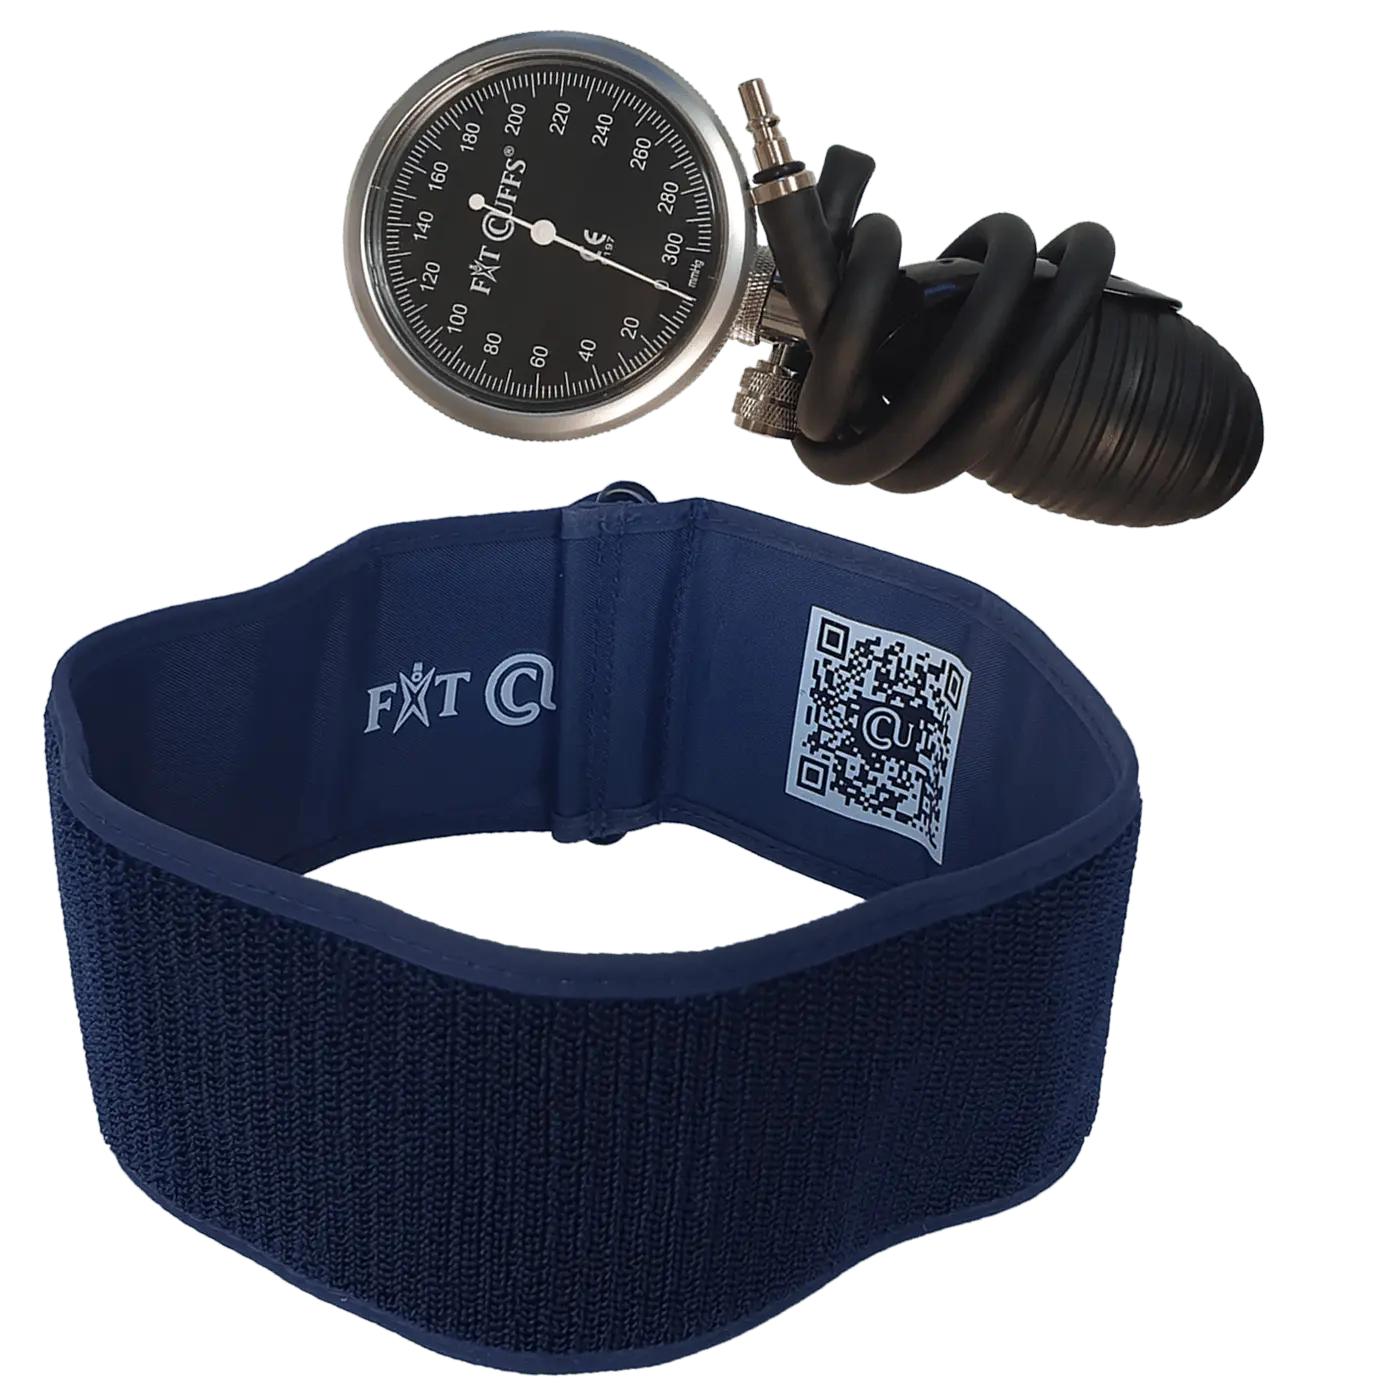 Se Fit Cuffs - Rehab Upper V3.1 - Standard - Blue hos Fitcuffs.com